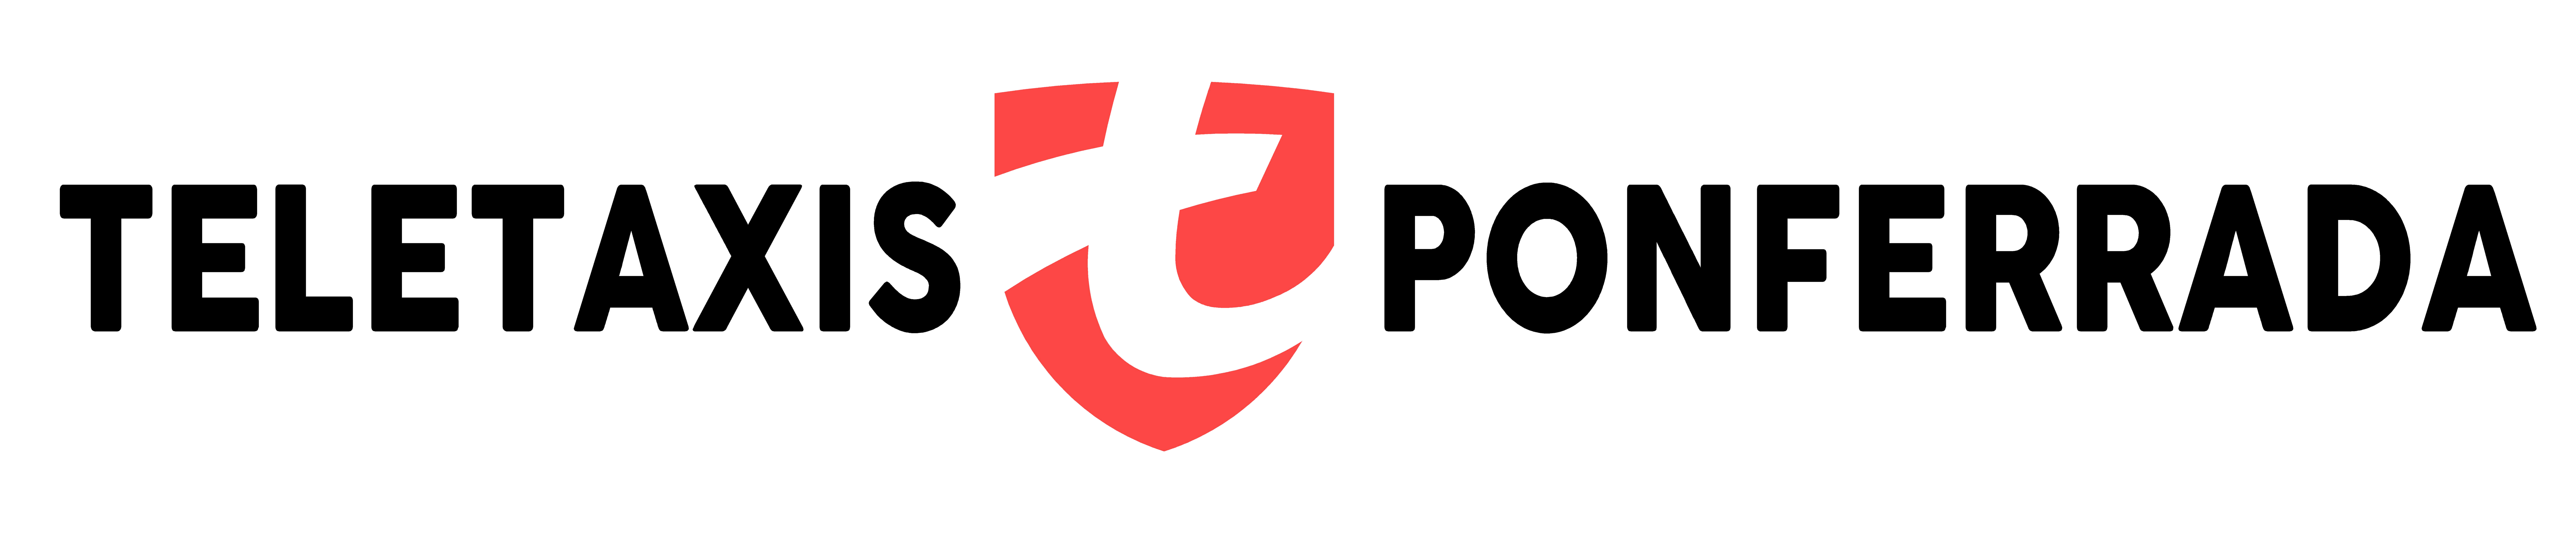 Logo Teletaxis Ponferrada